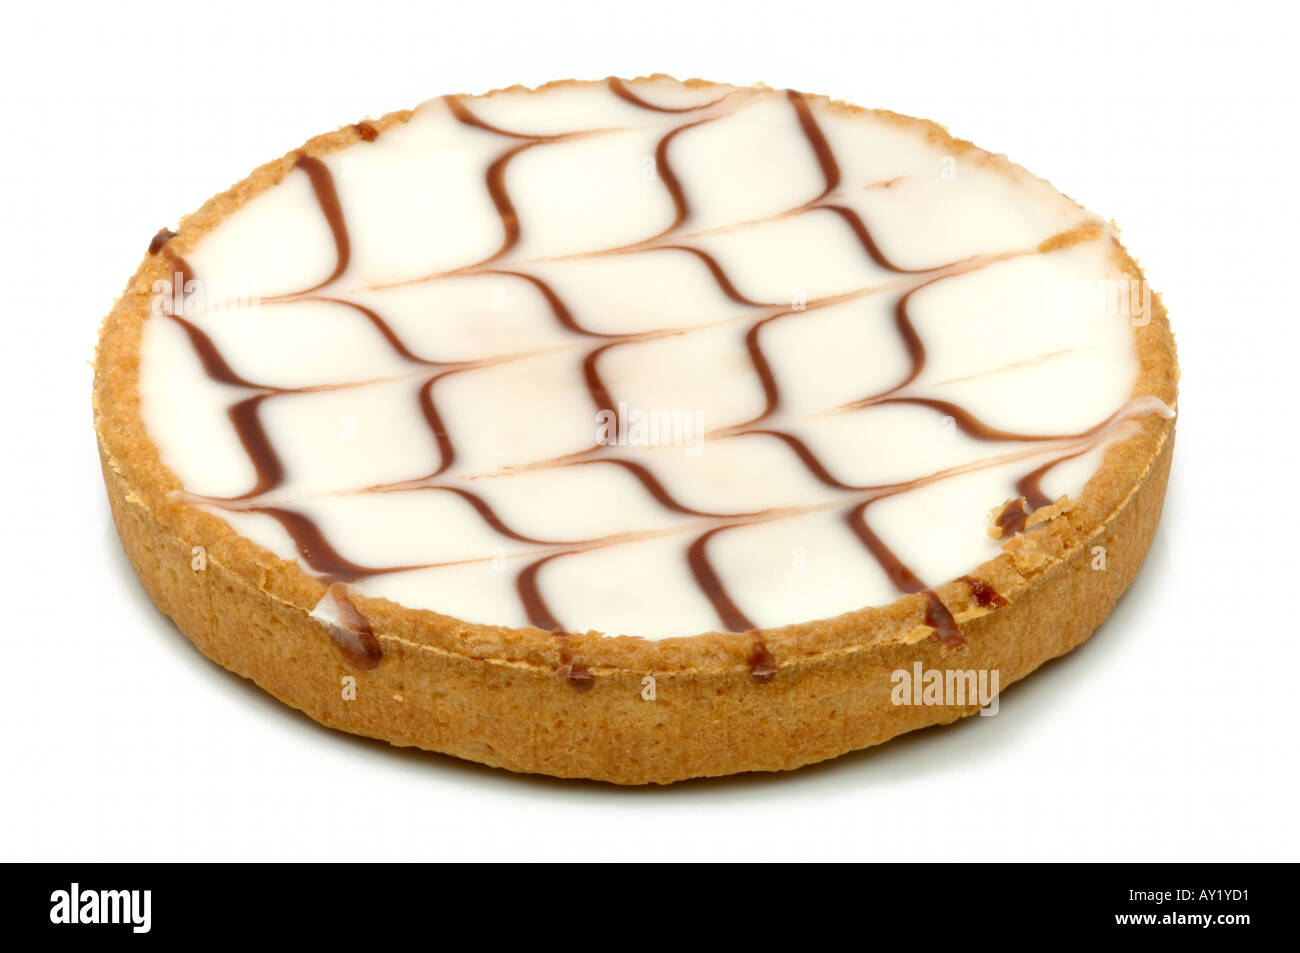 Whole Bakewells tart traditional english dessert on white background Stock Photo